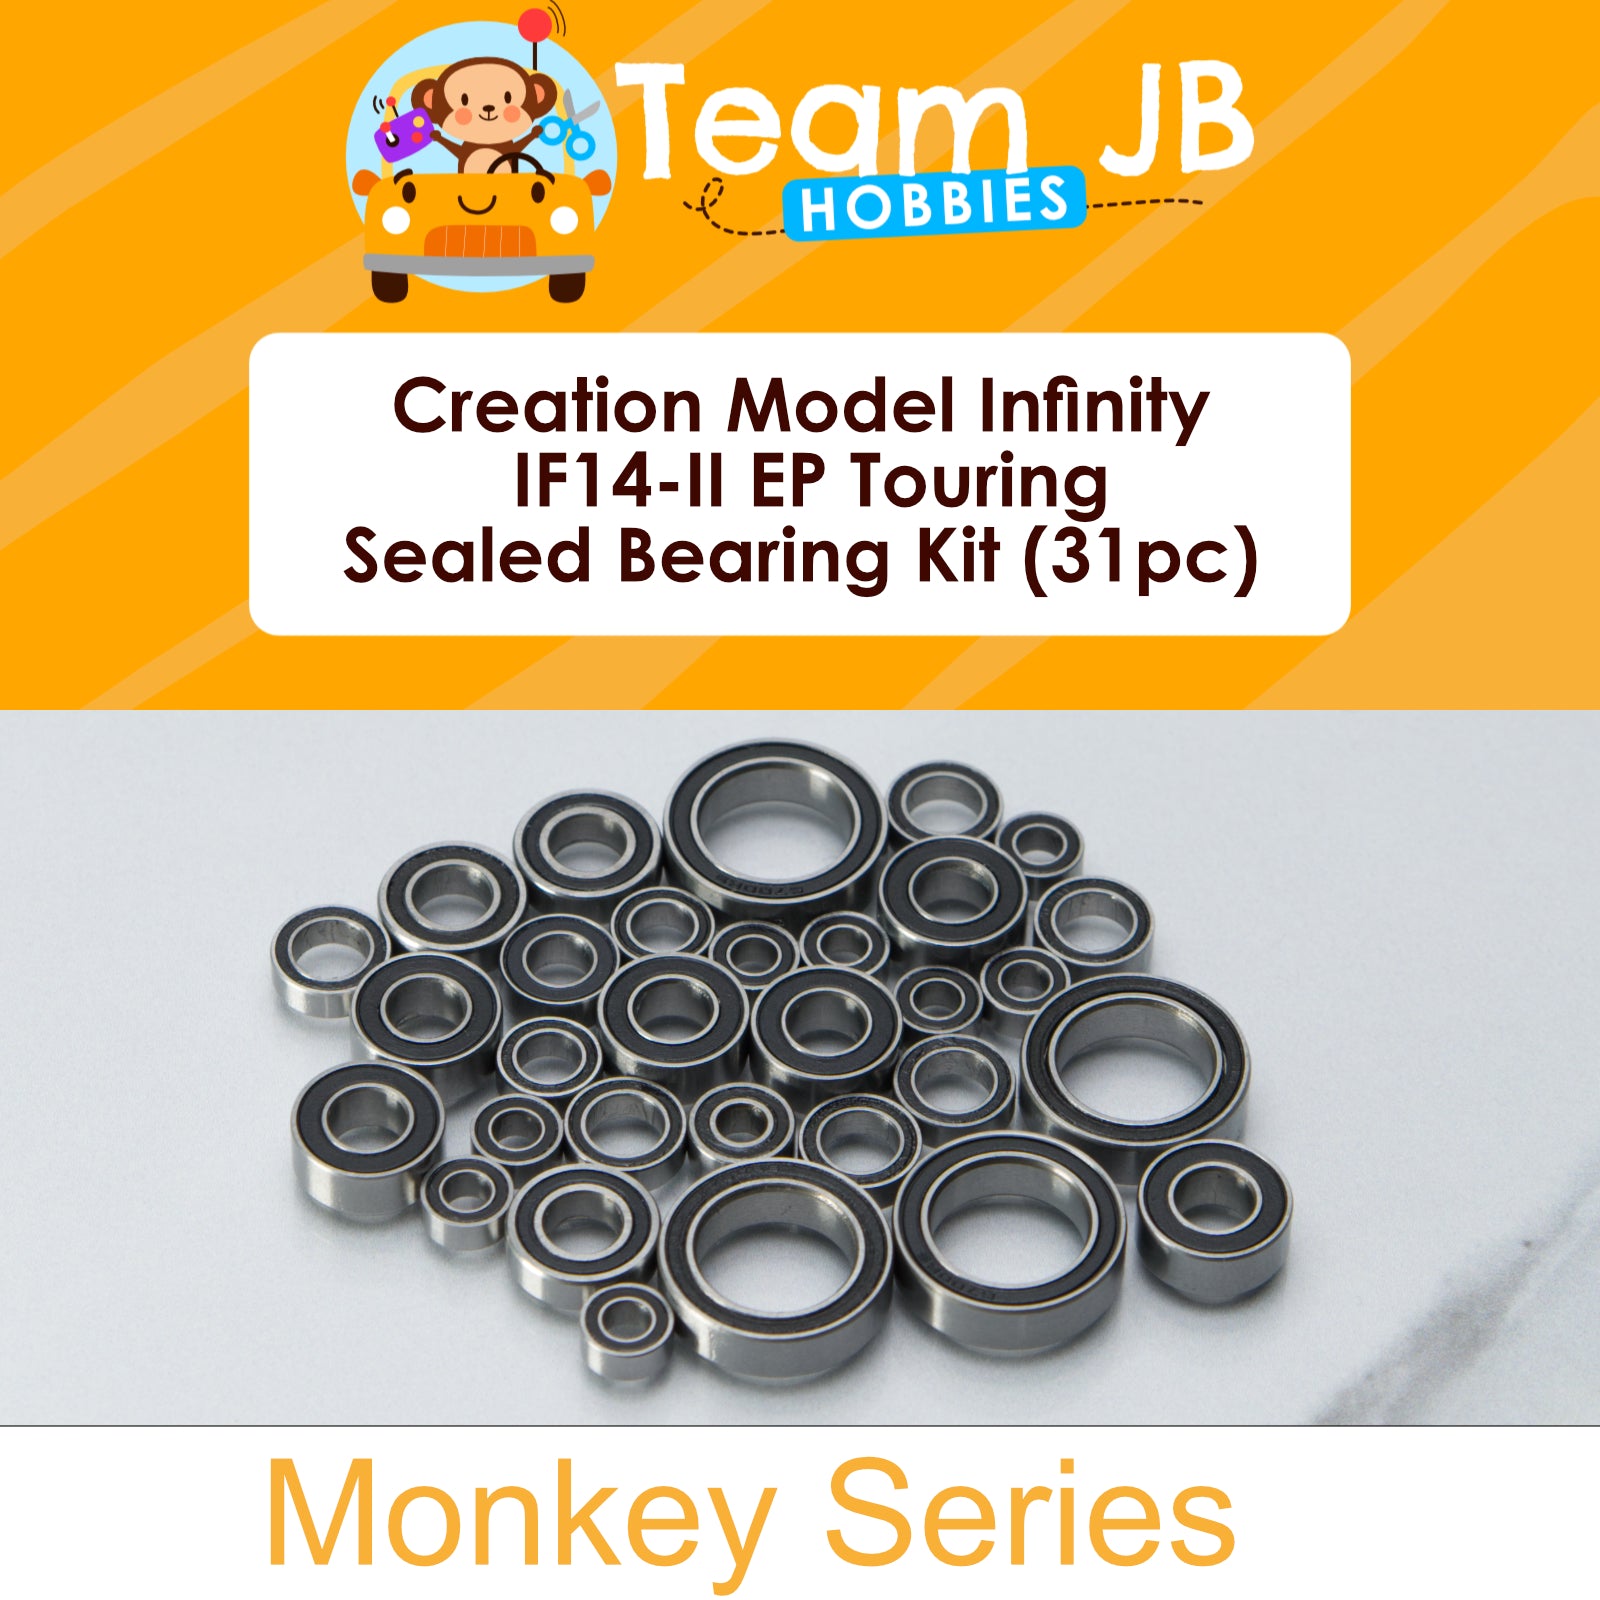 Creation Model Infinity IF14-II EP Touring - Sealed Bearing Kit